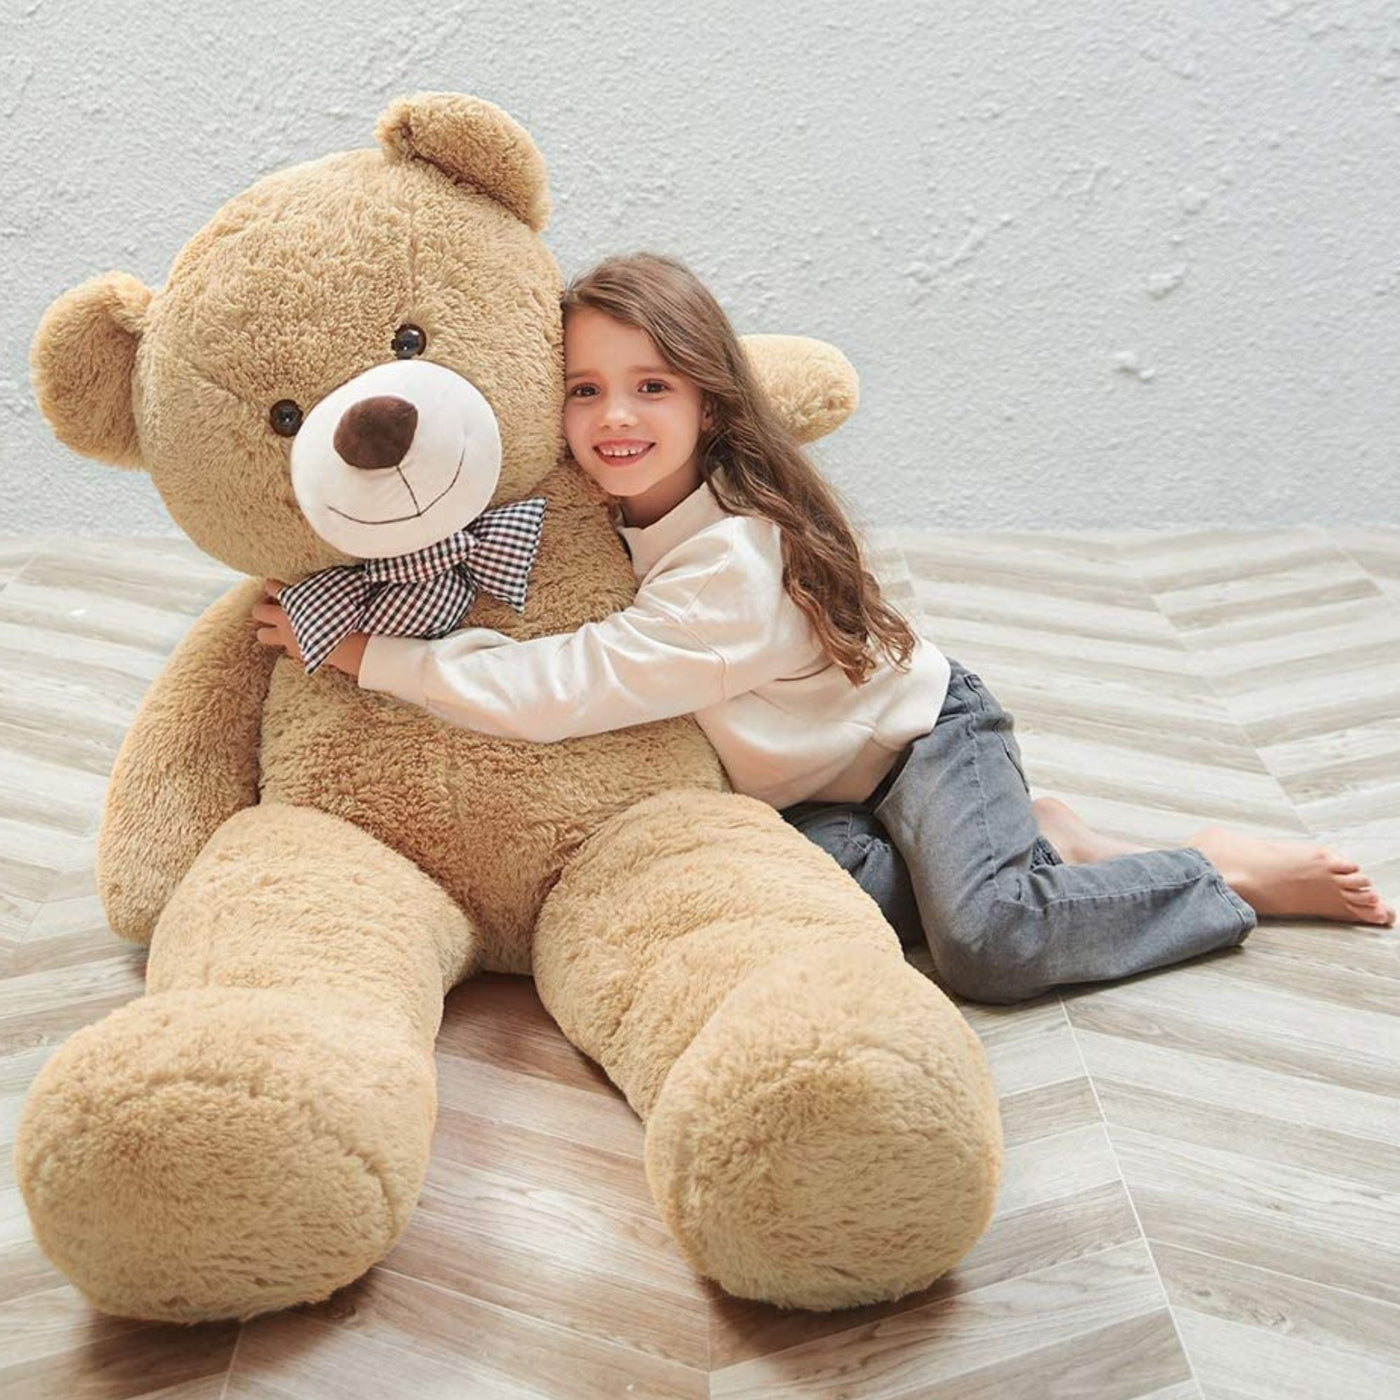 Giant Teddy Bear Stuffed Animal Toy, Light Brown - MorisMos Stuffed Animal Toys